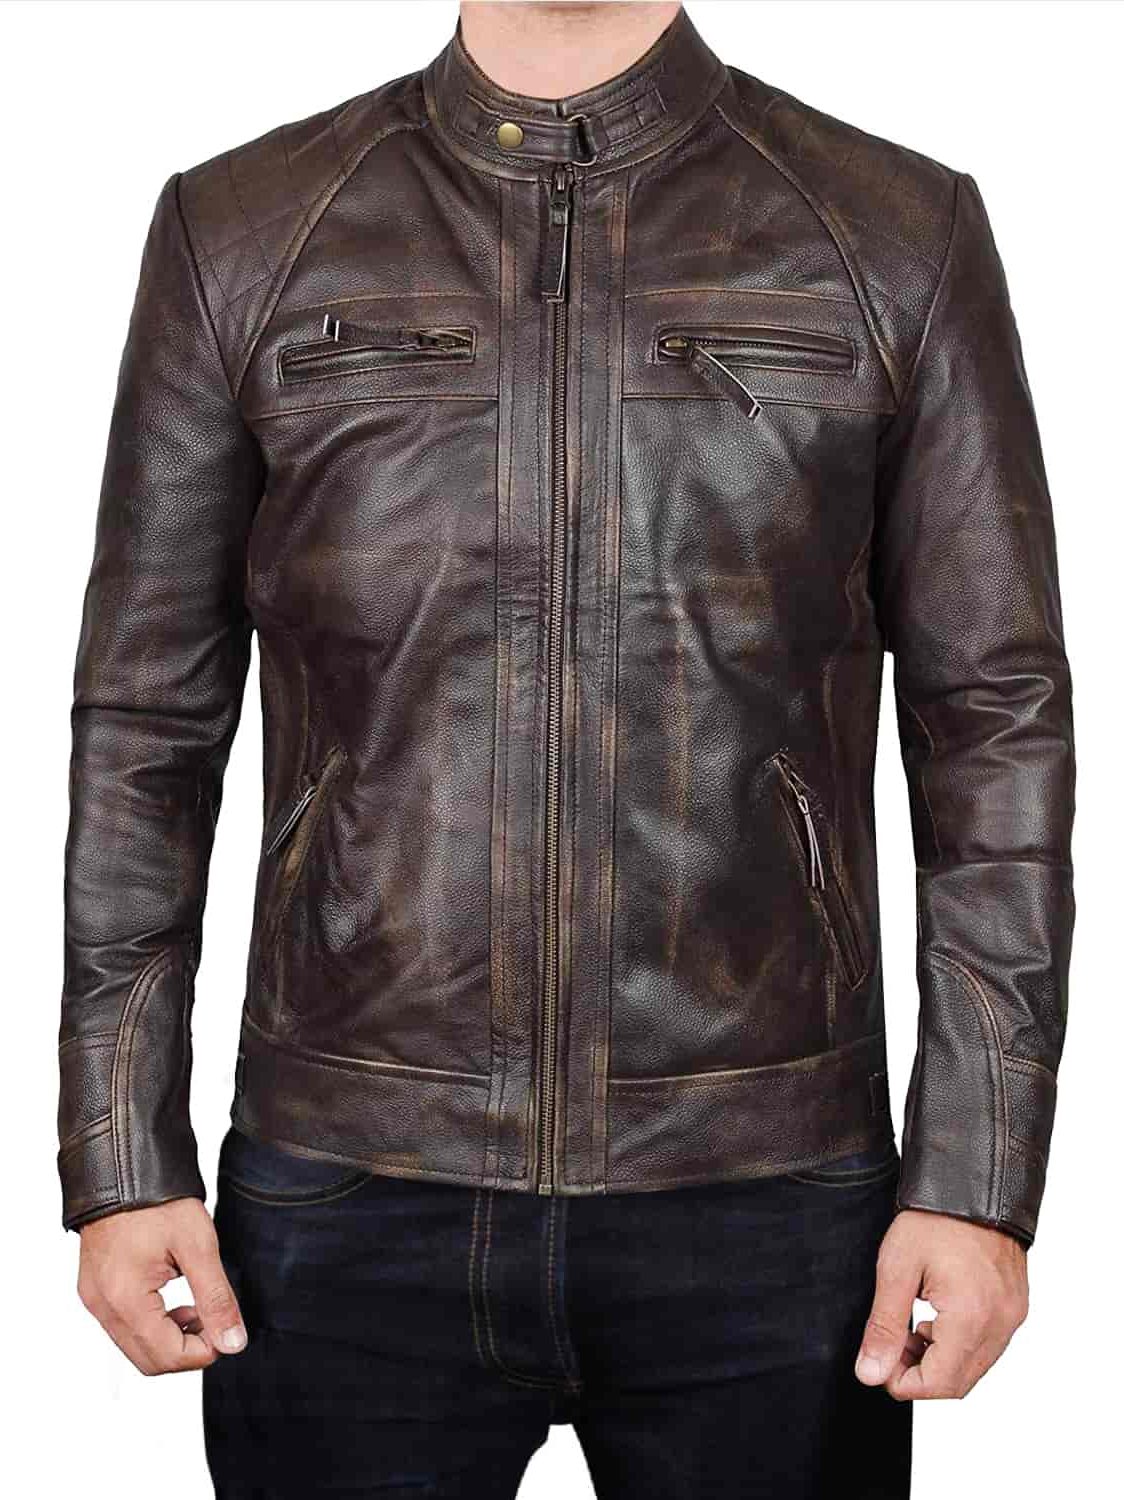 Claude Men Distressed Brown Biker Leather Jacket Video Game Jacket